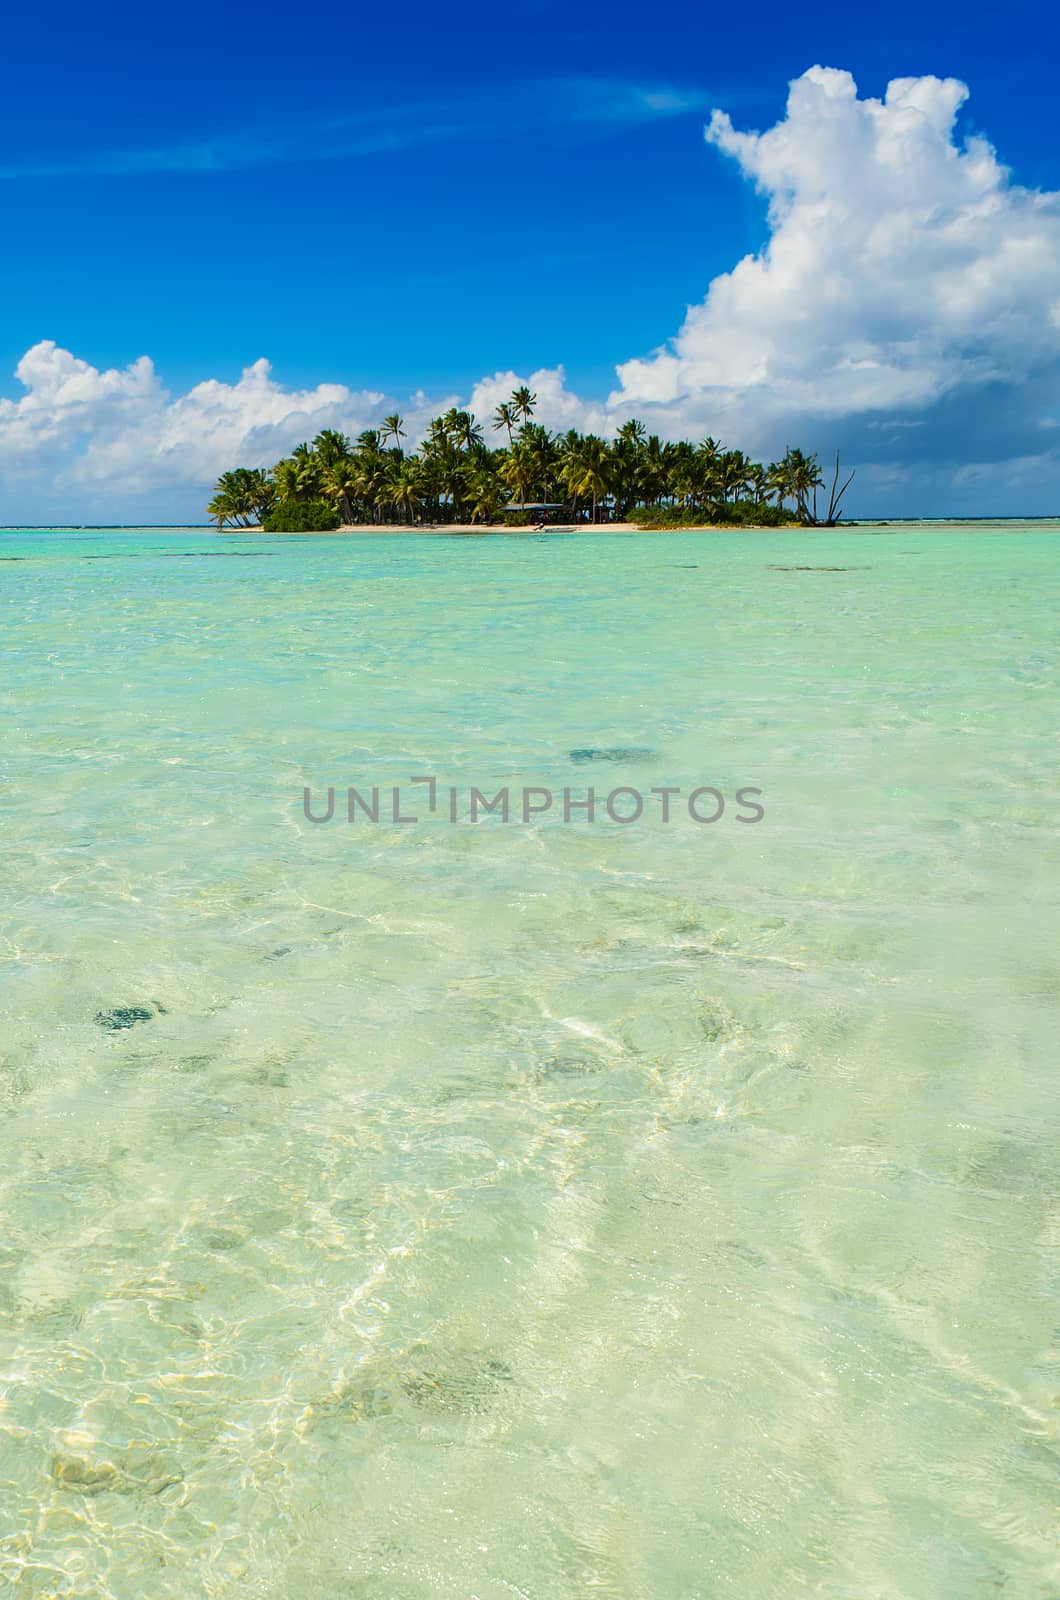 Uninhabited or desert island in the Blue Lagoon inside Rangiroa atoll, an island of the Tahiti archipelago French Polynsesia in the Pacific Ocean.
